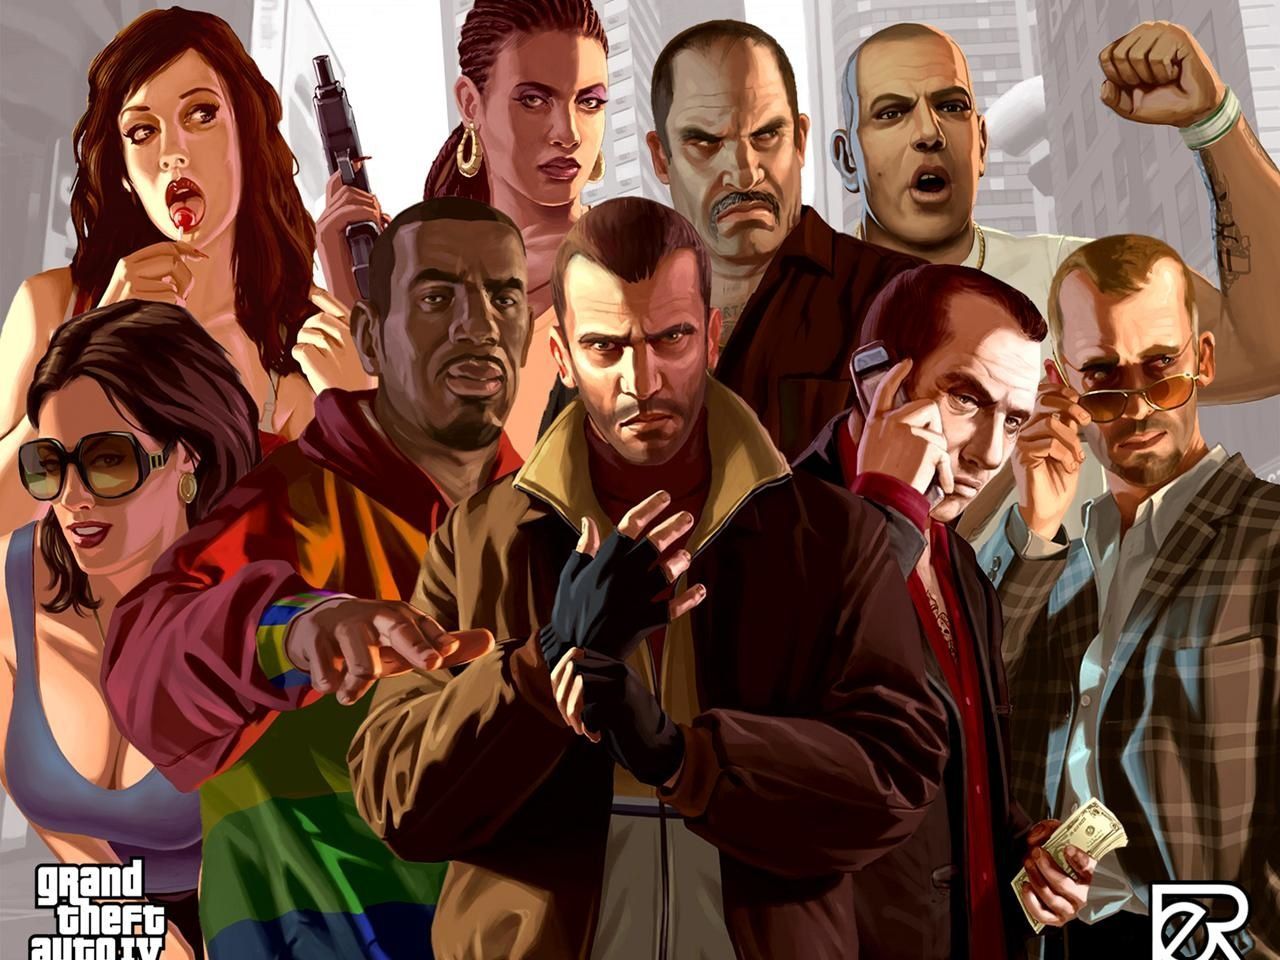 Grand Theft Auto Characters Wallpaper .wallpaperaccess.com